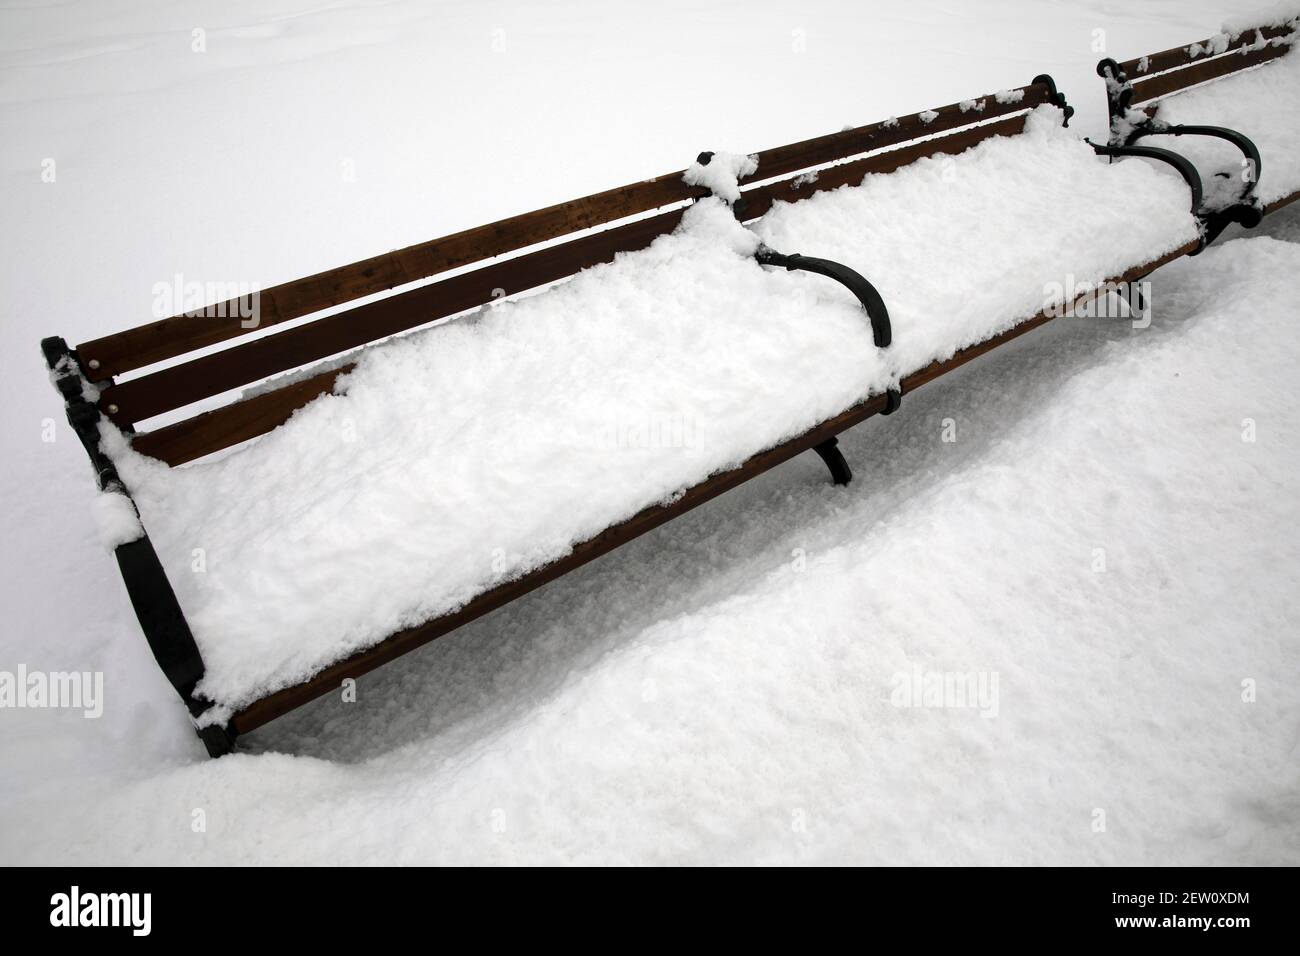 Panchine del parco cittadino coperte di neve, Boston Massachusetts Foto Stock